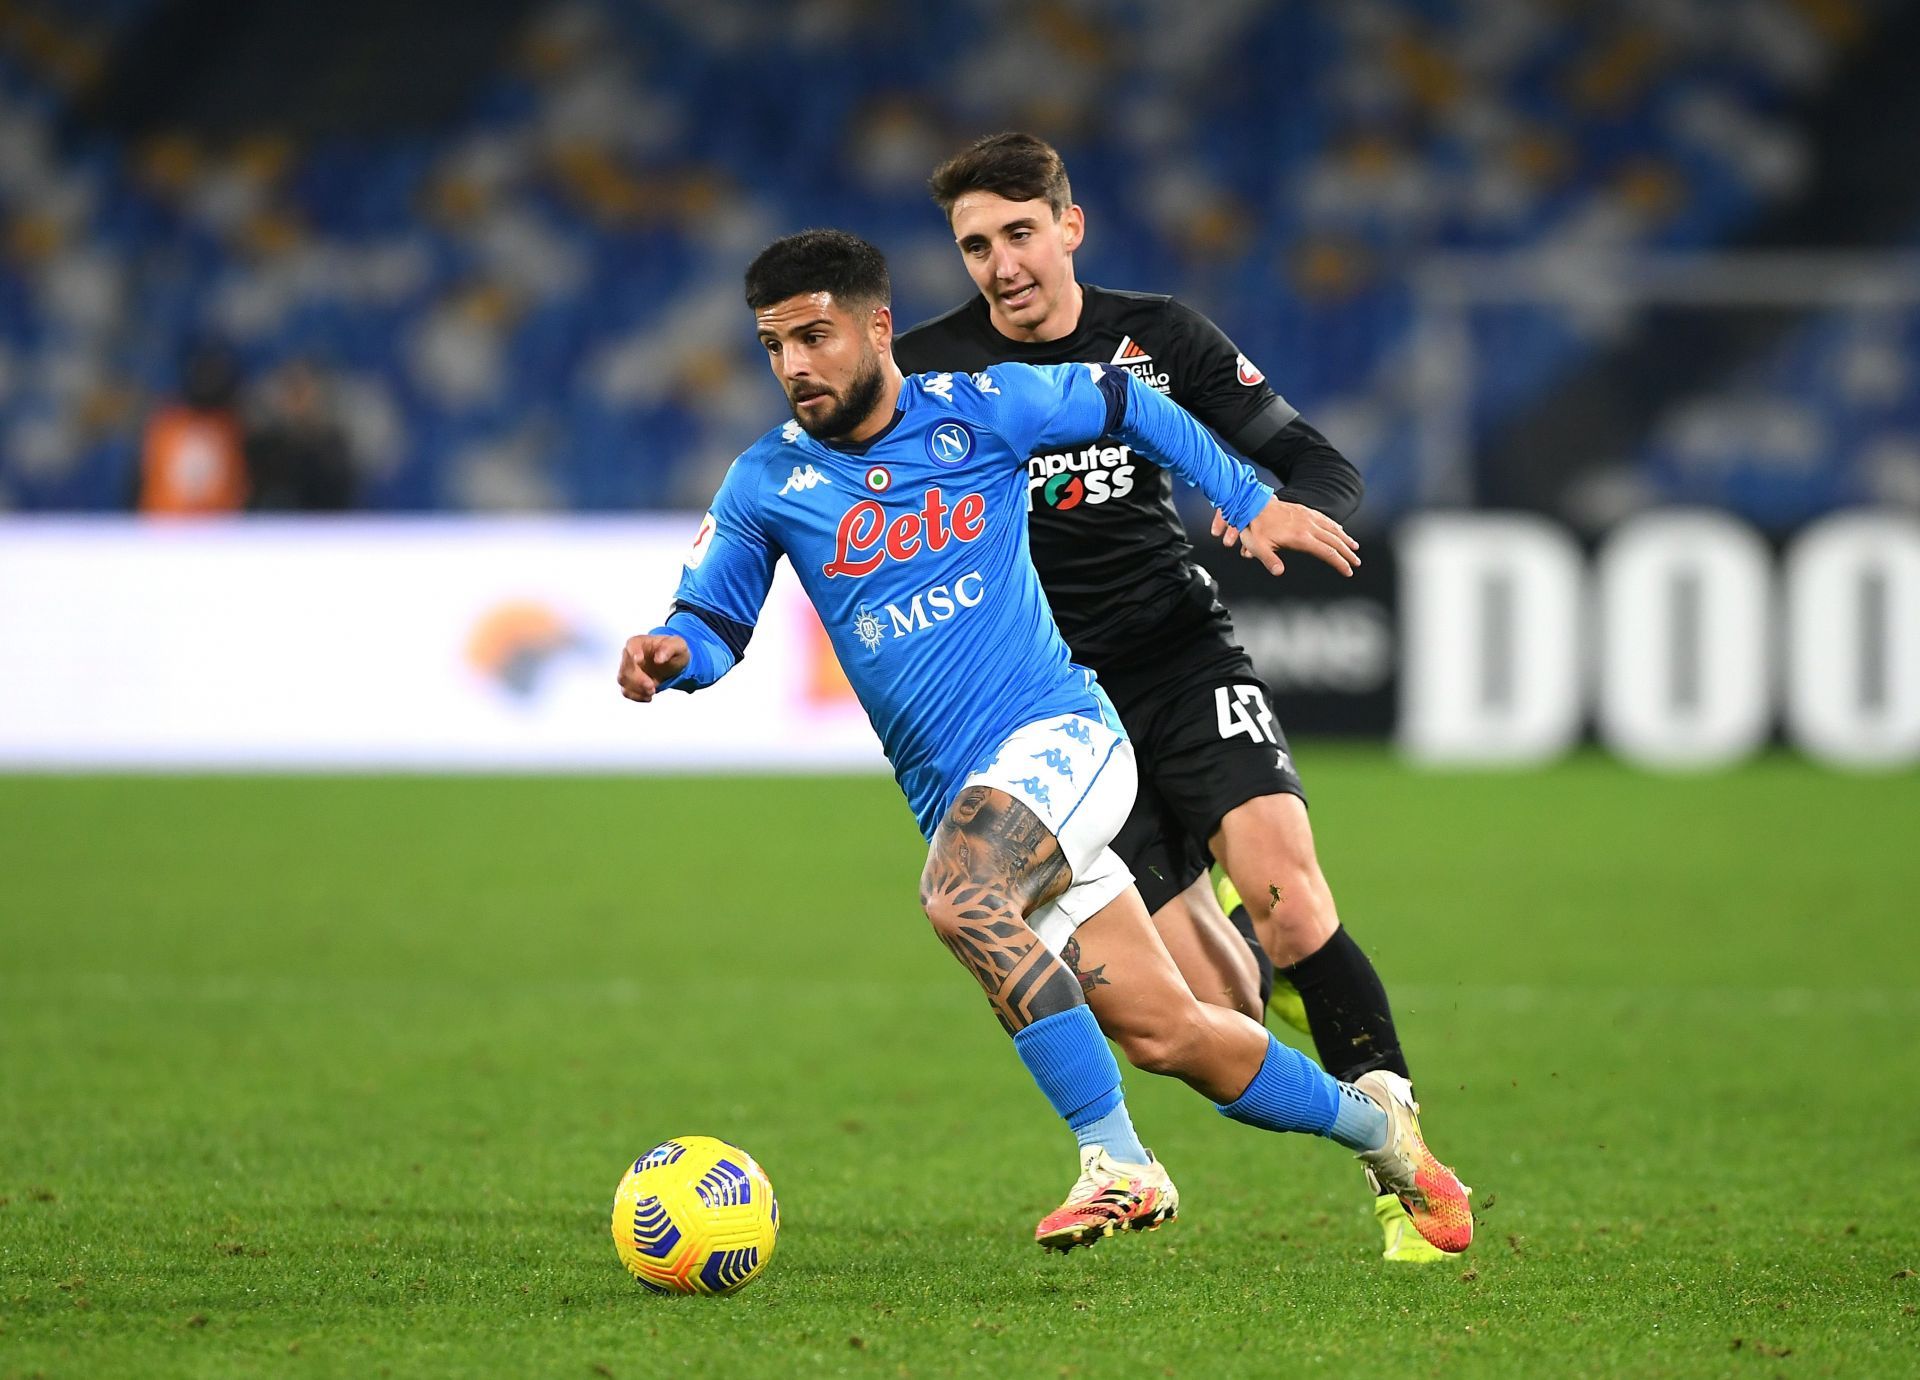 Napoli play host to Empoli on Sunday